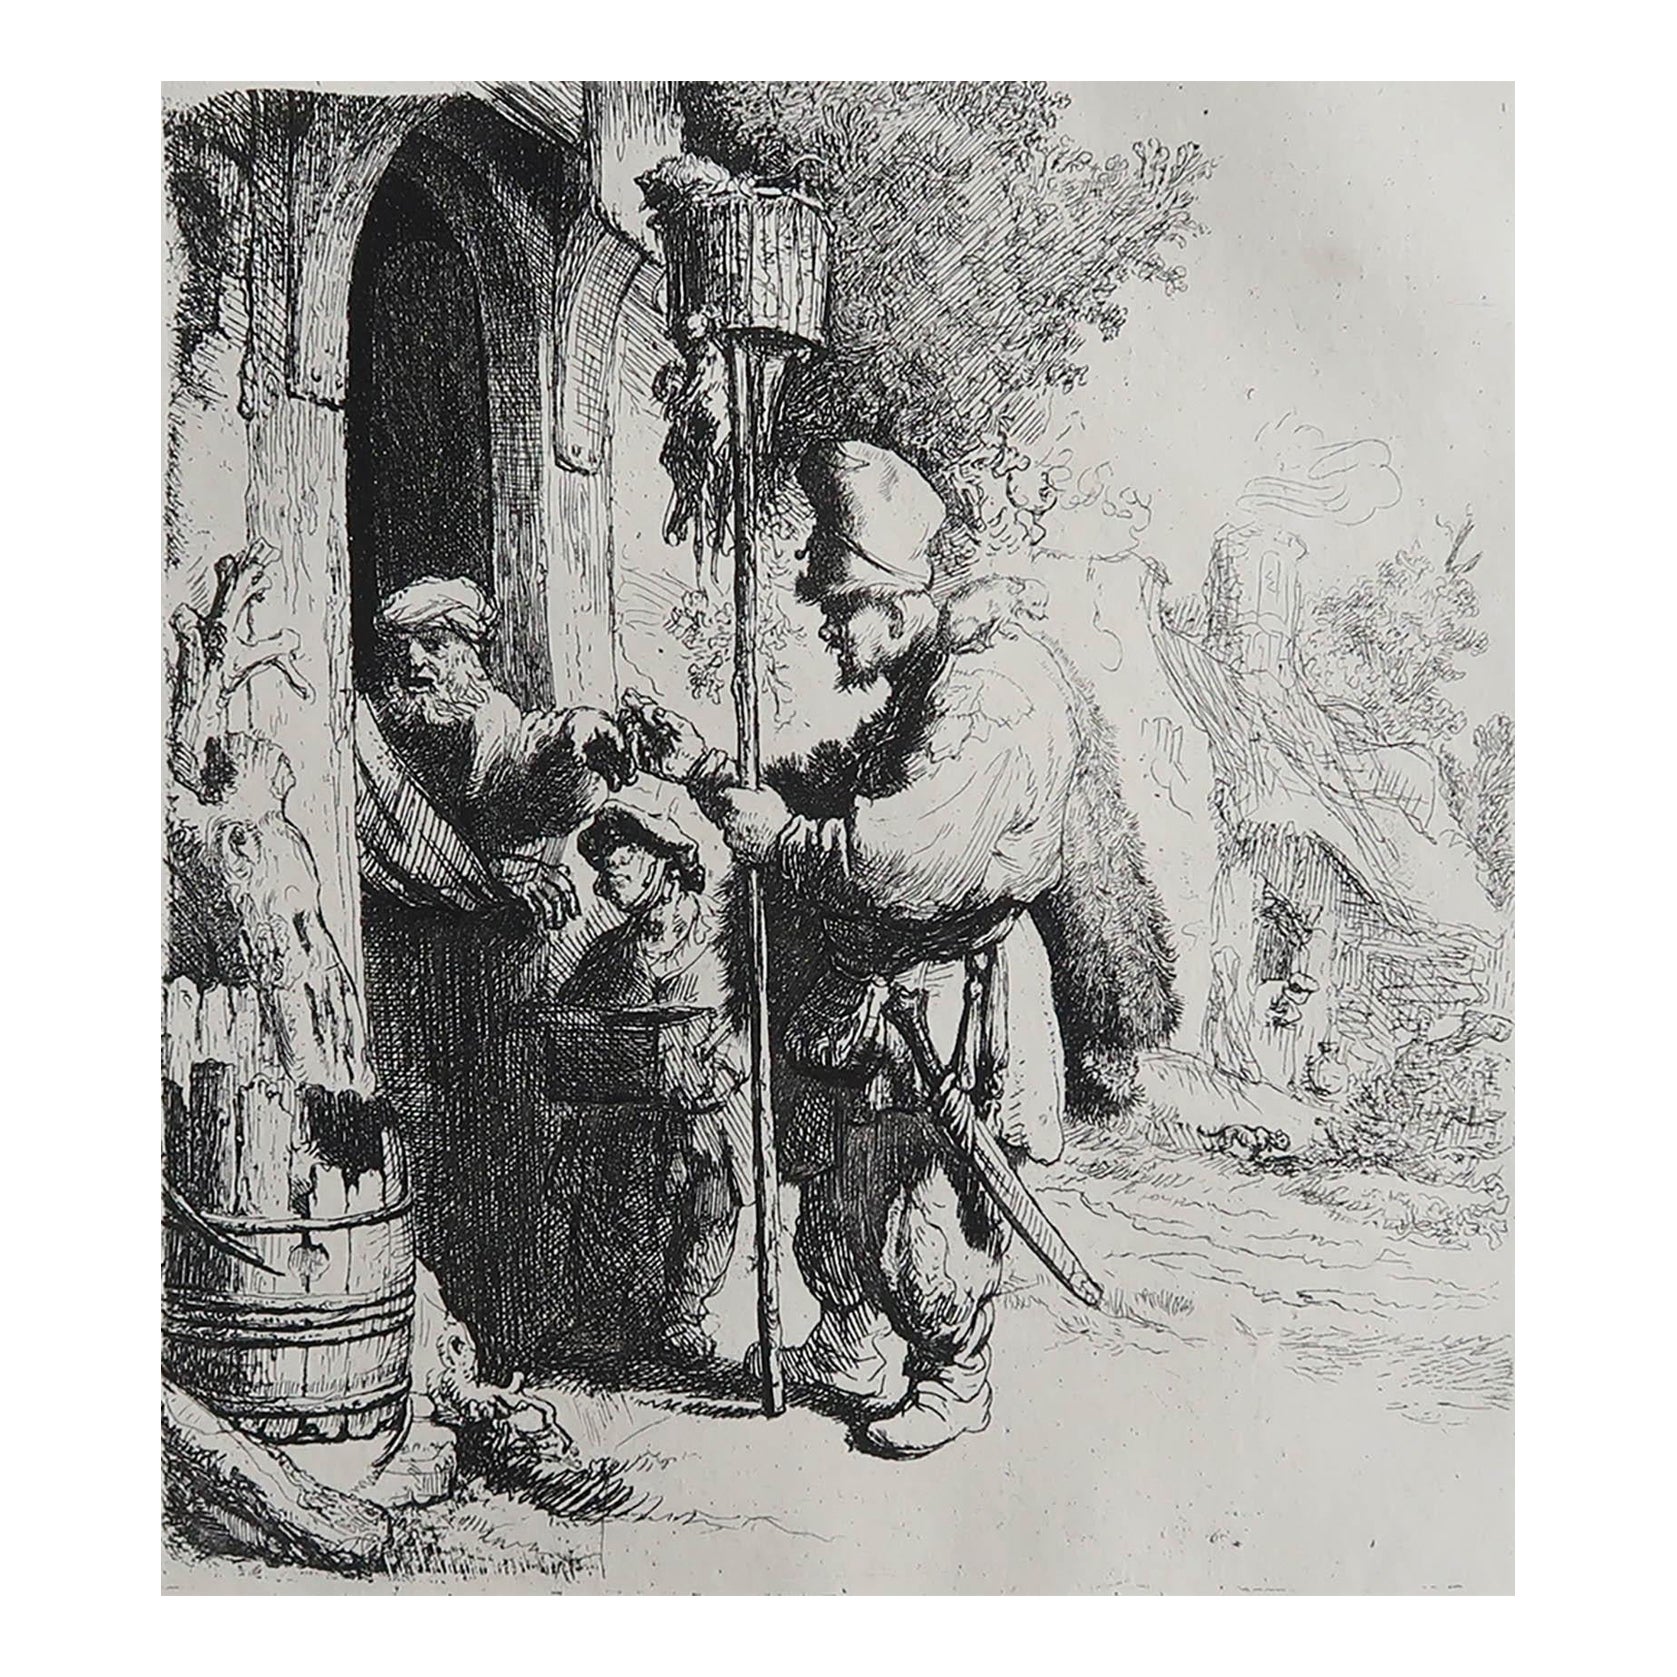 Original Antique Etching By A.Durand After Rembrandt. C.1900